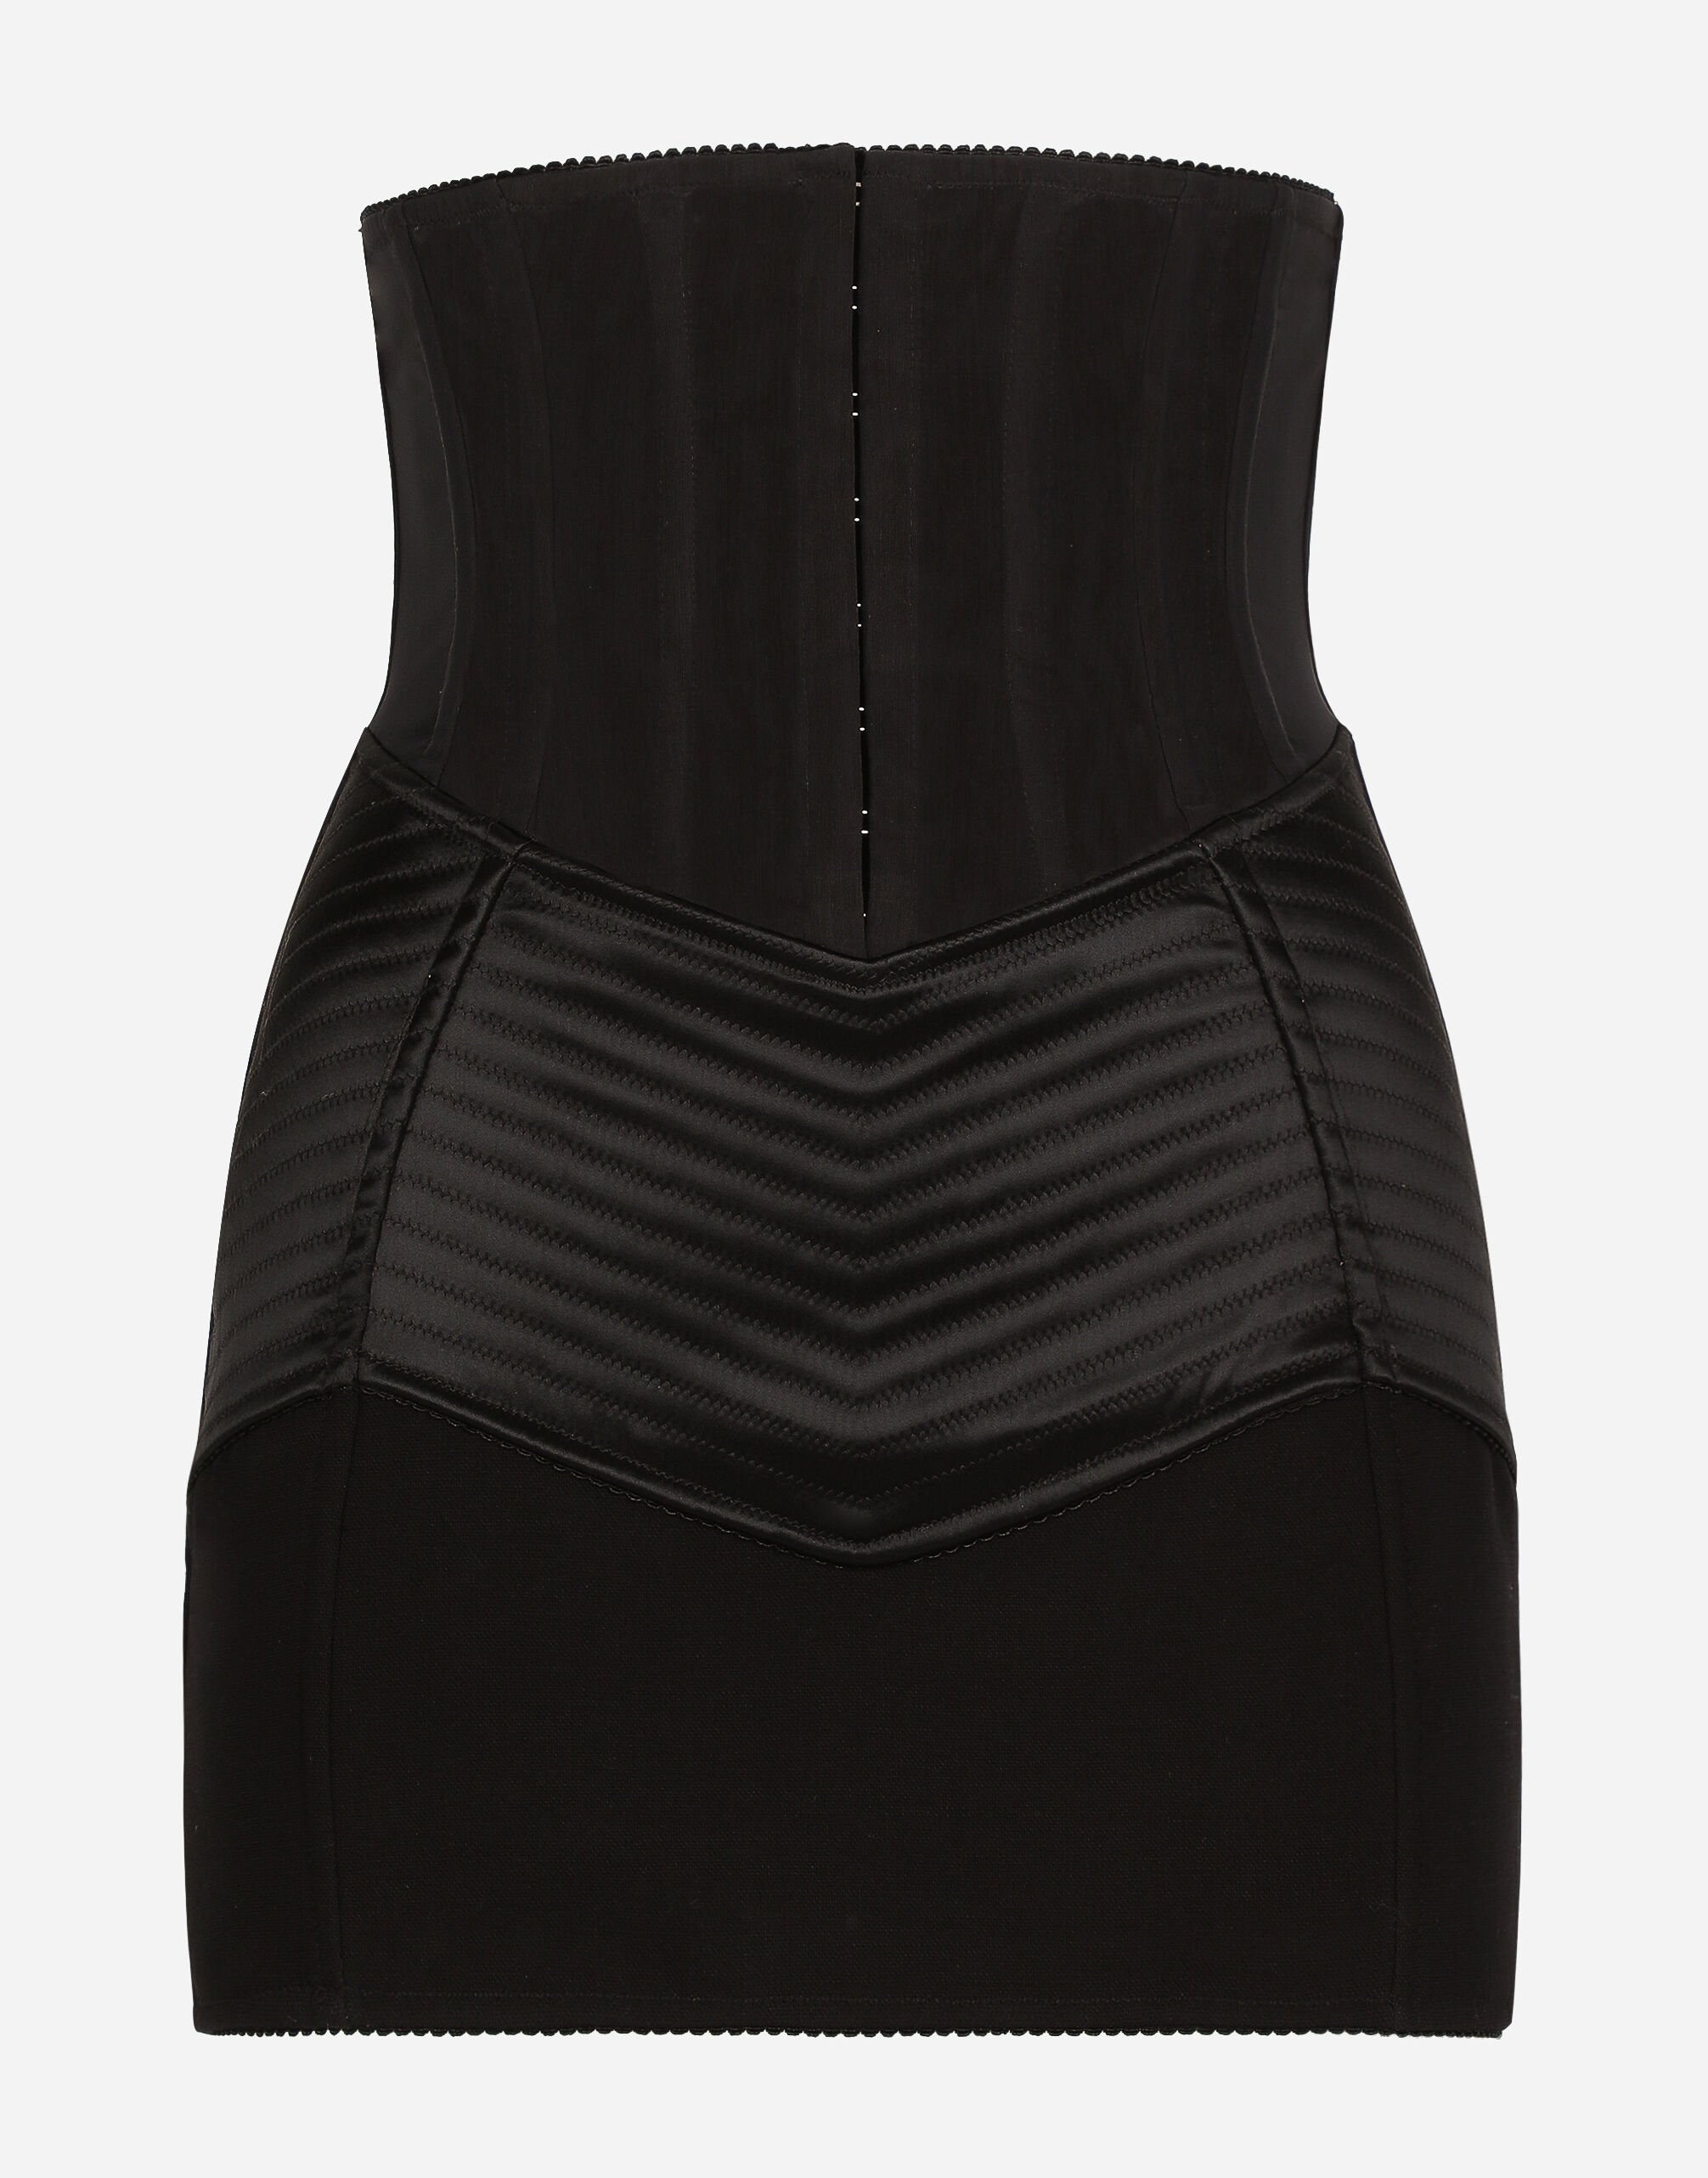 Dolce & Gabbana Short skirt with corset belt detail Black FXO05ZJFMBC